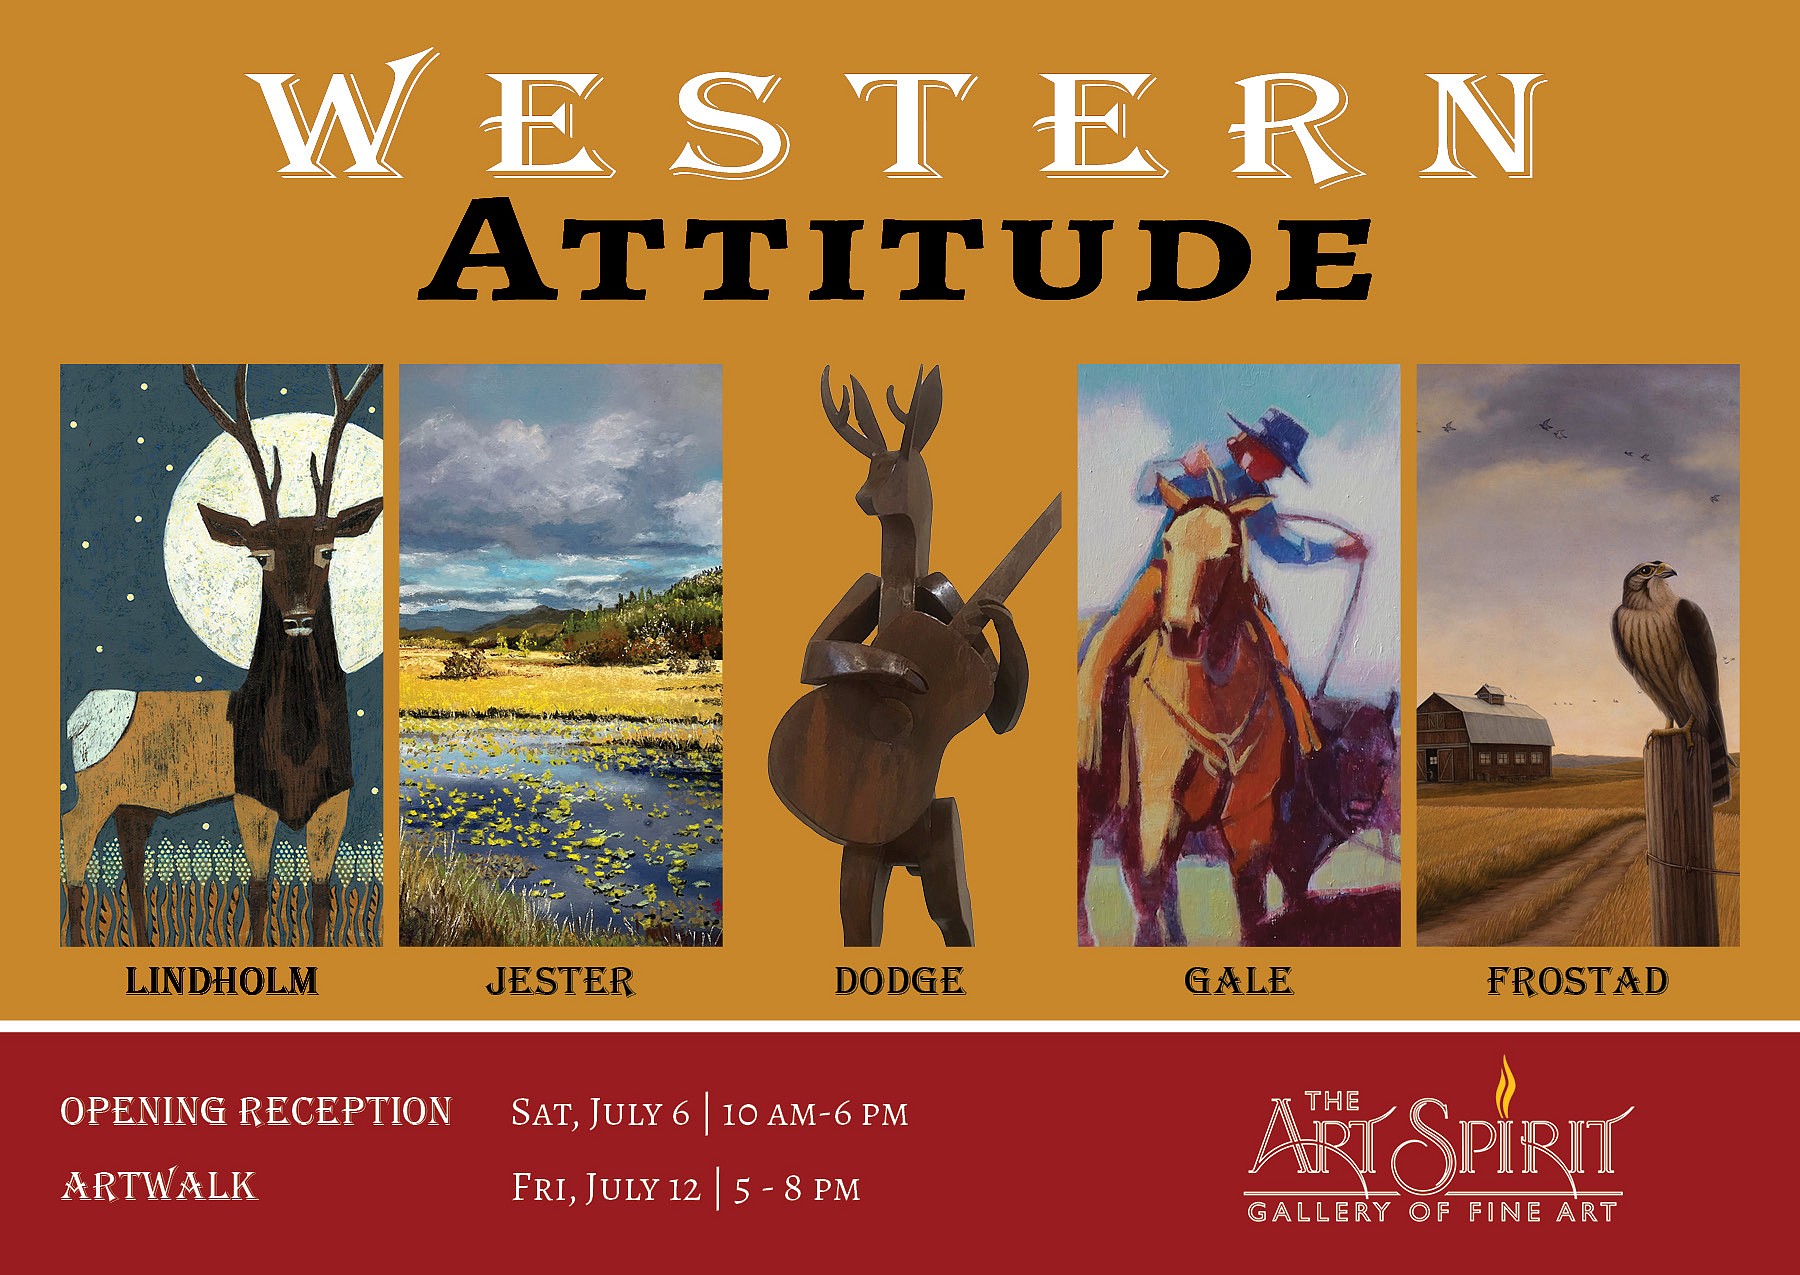 7 24 Western Attitude postcard